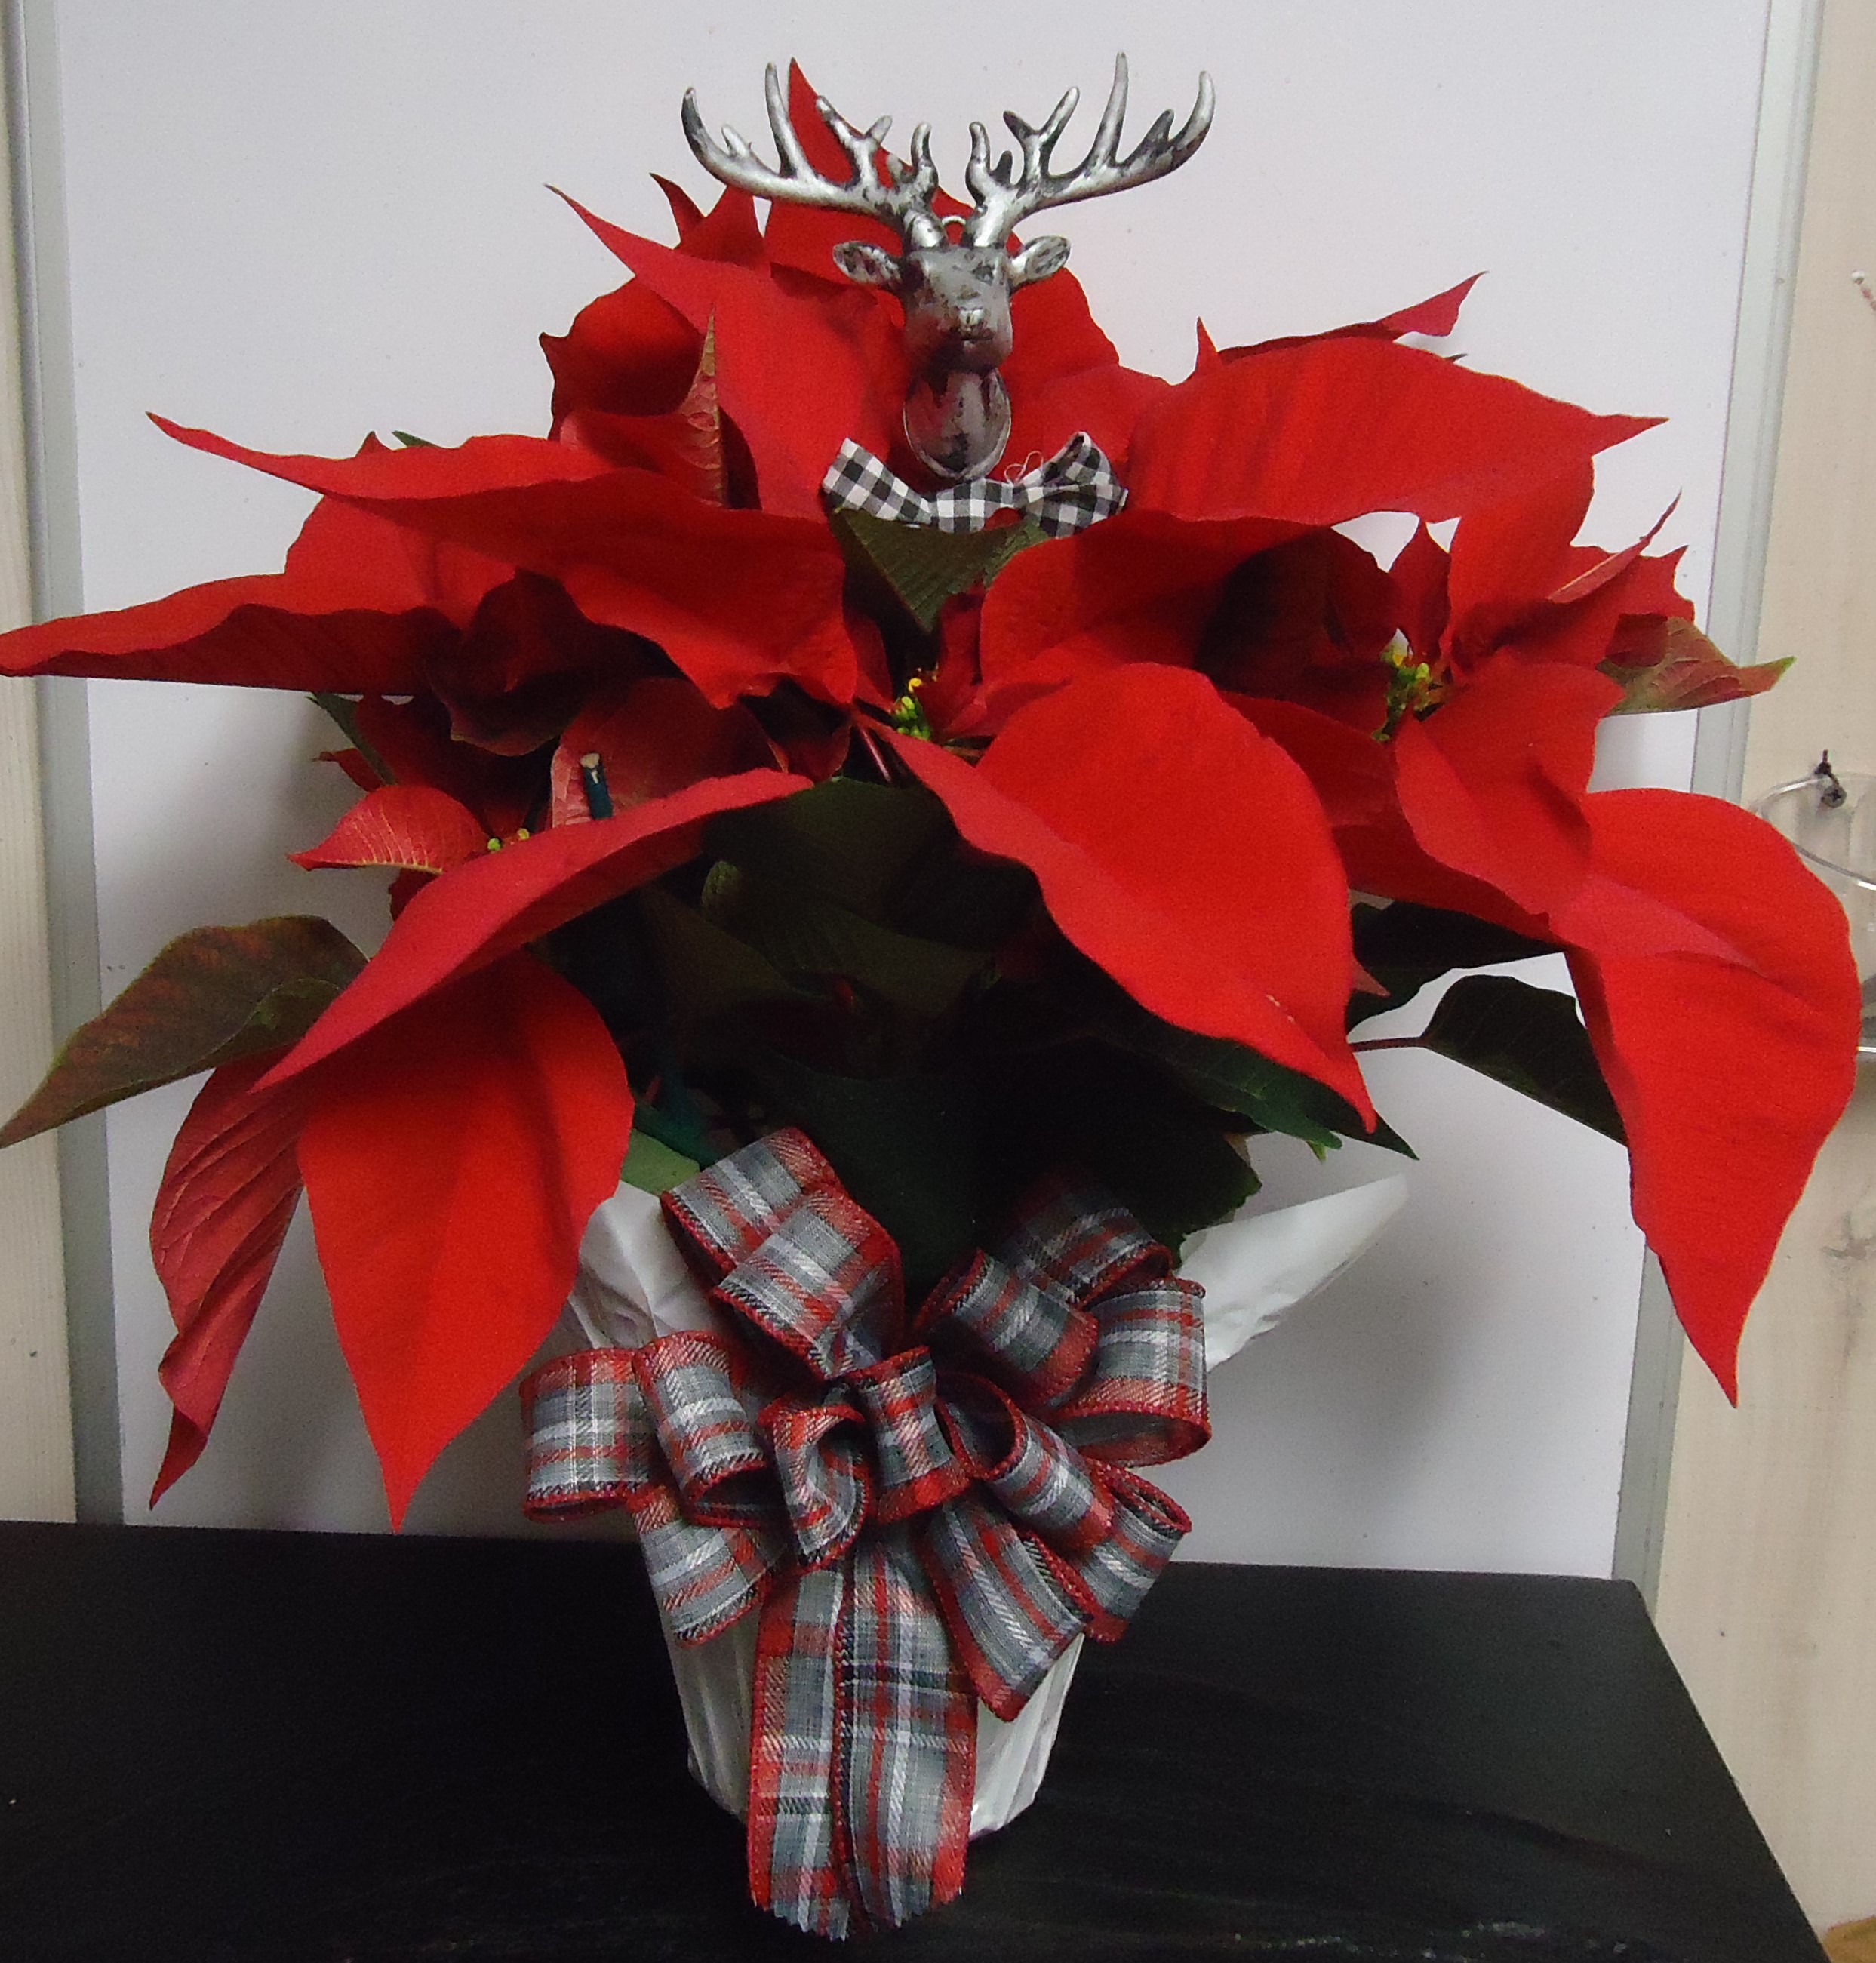 (3B) "Red" Poinsettia
W/ Deer Head
$40.00